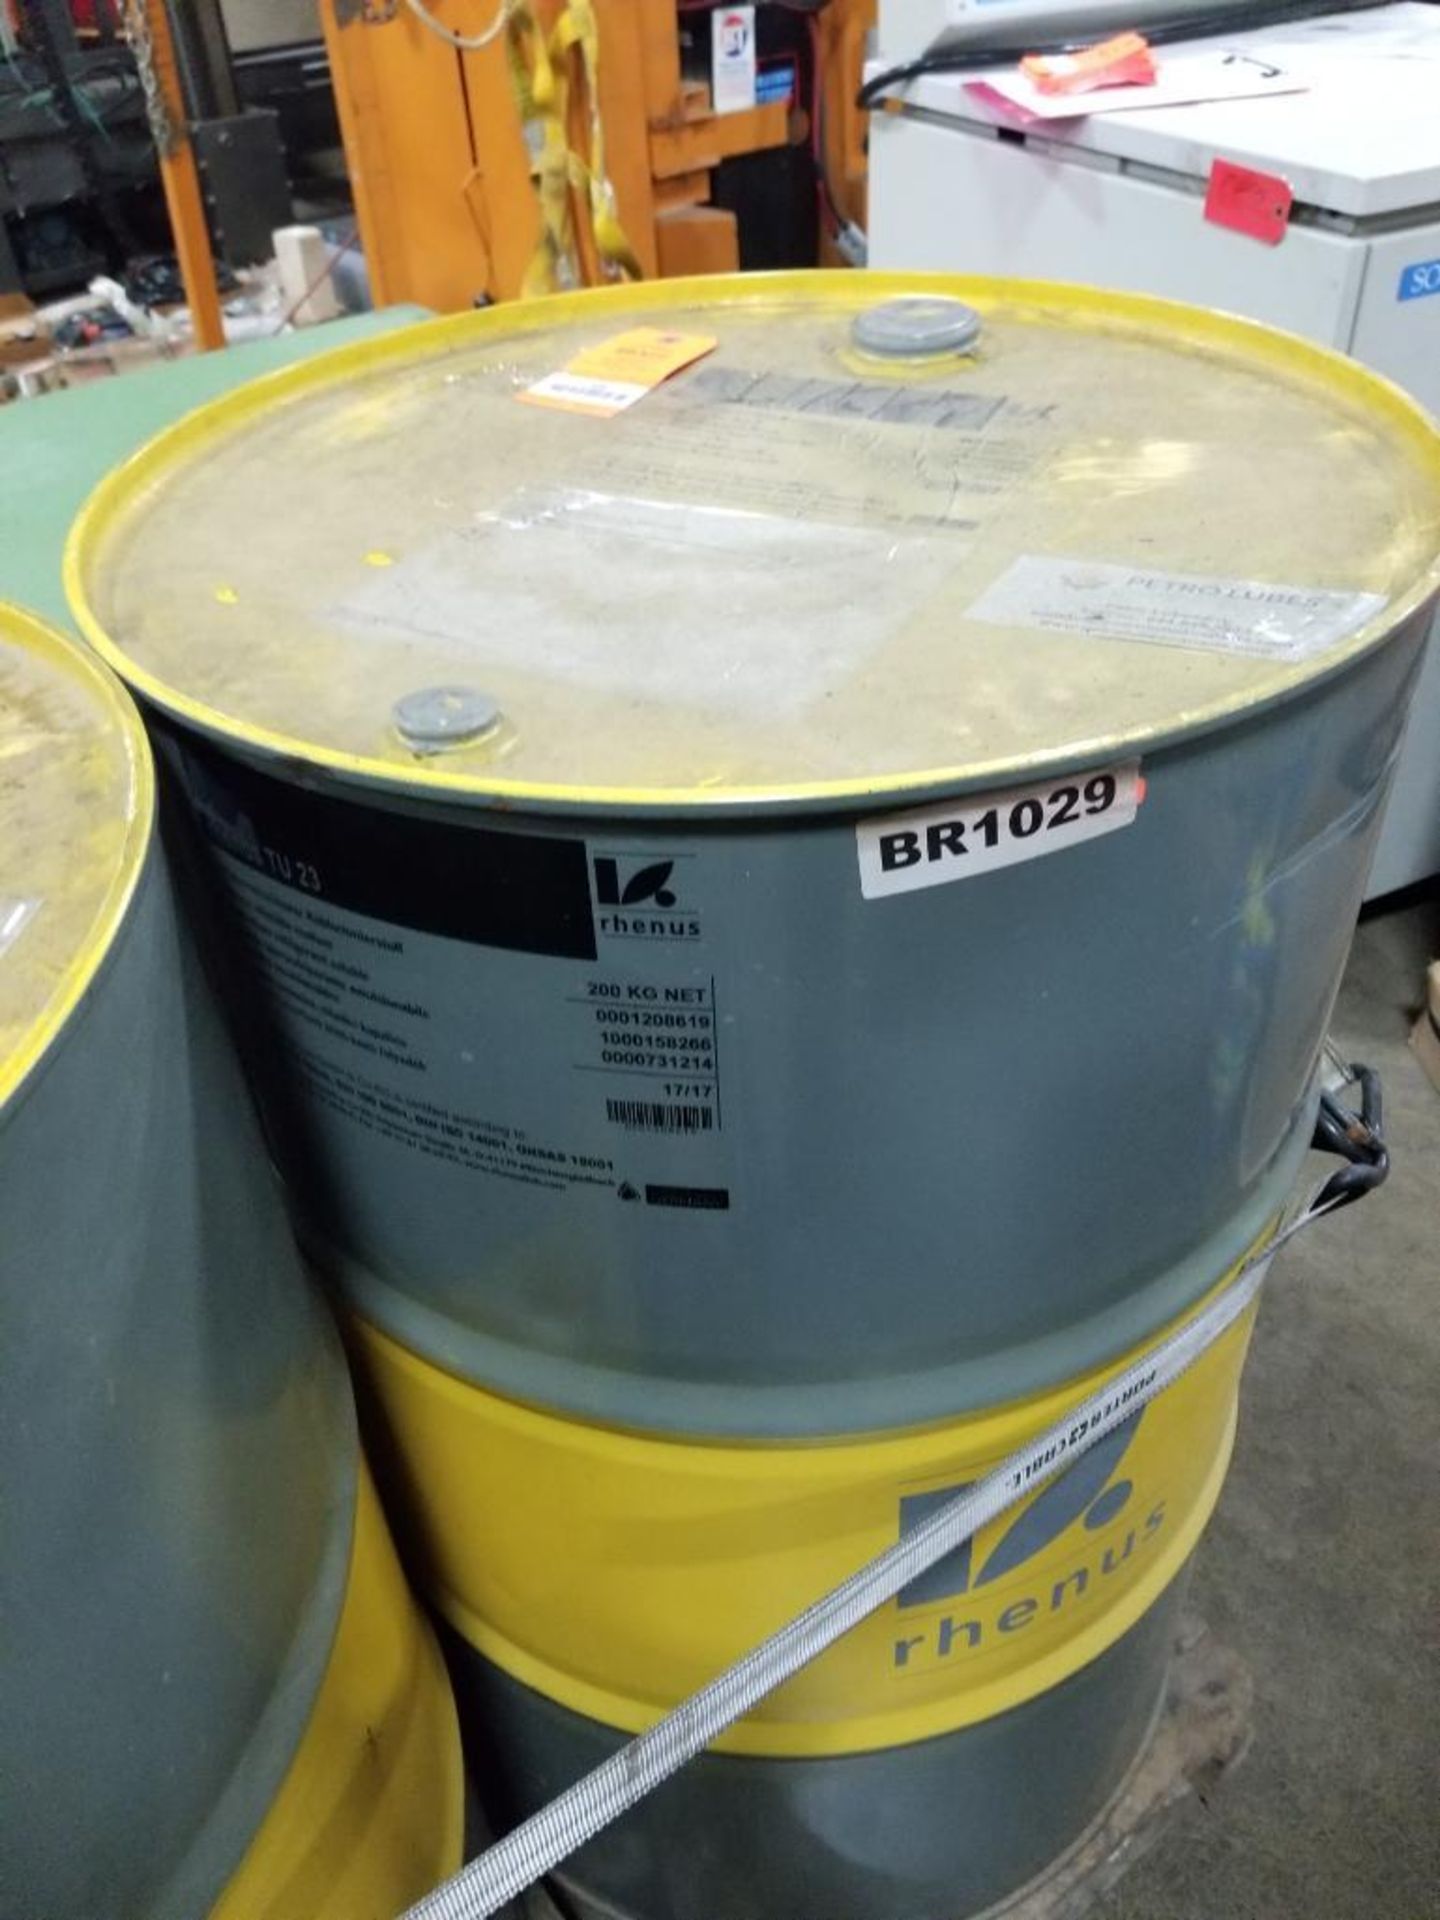 55 gallon barrel of Rhenus TU 23 metalworking coolant. New sealed container.